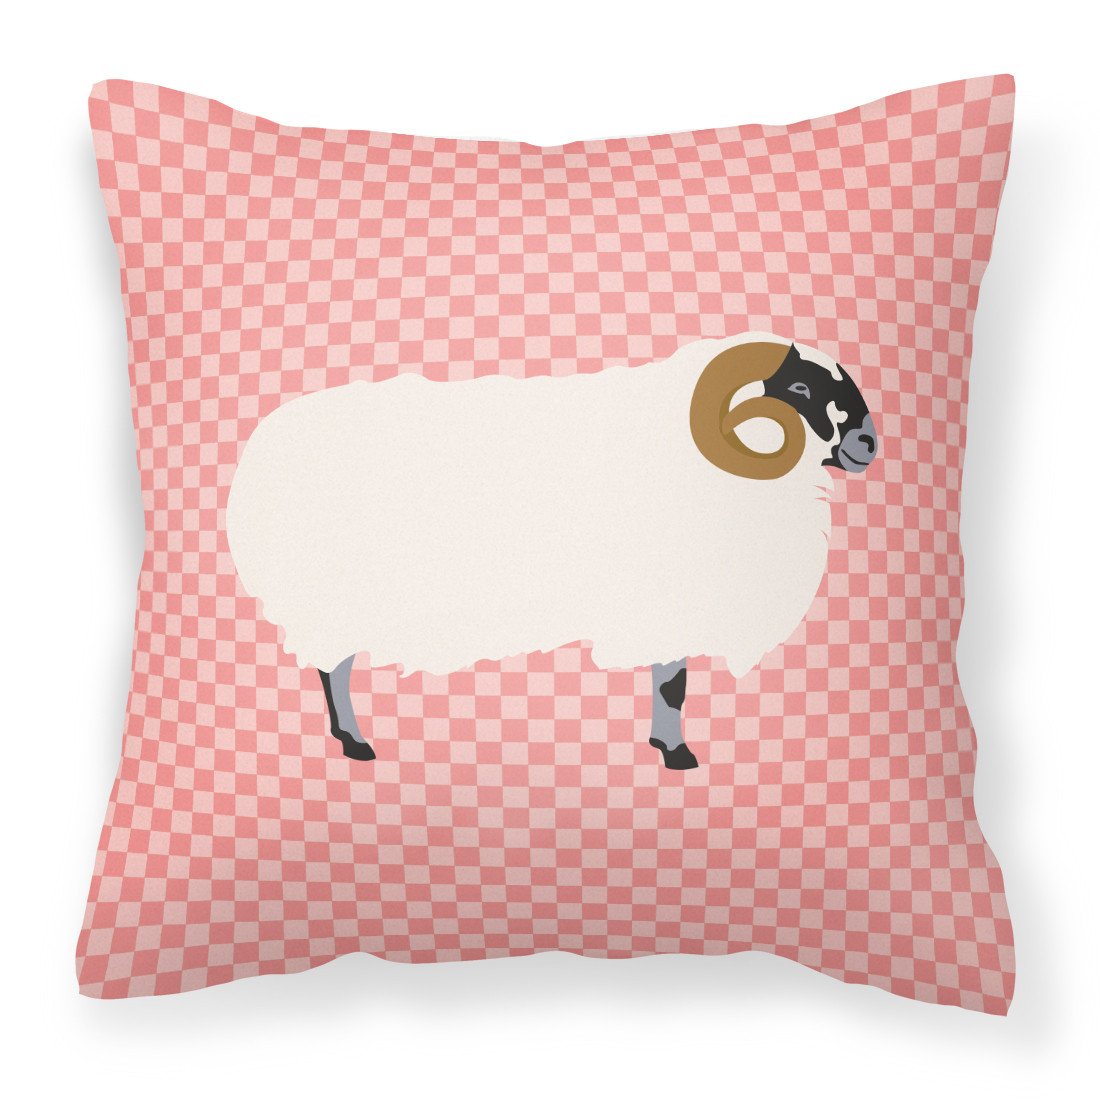 Scottish Blackface Sheep Pink Check Fabric Decorative Pillow BB7973PW1818 by Caroline's Treasures